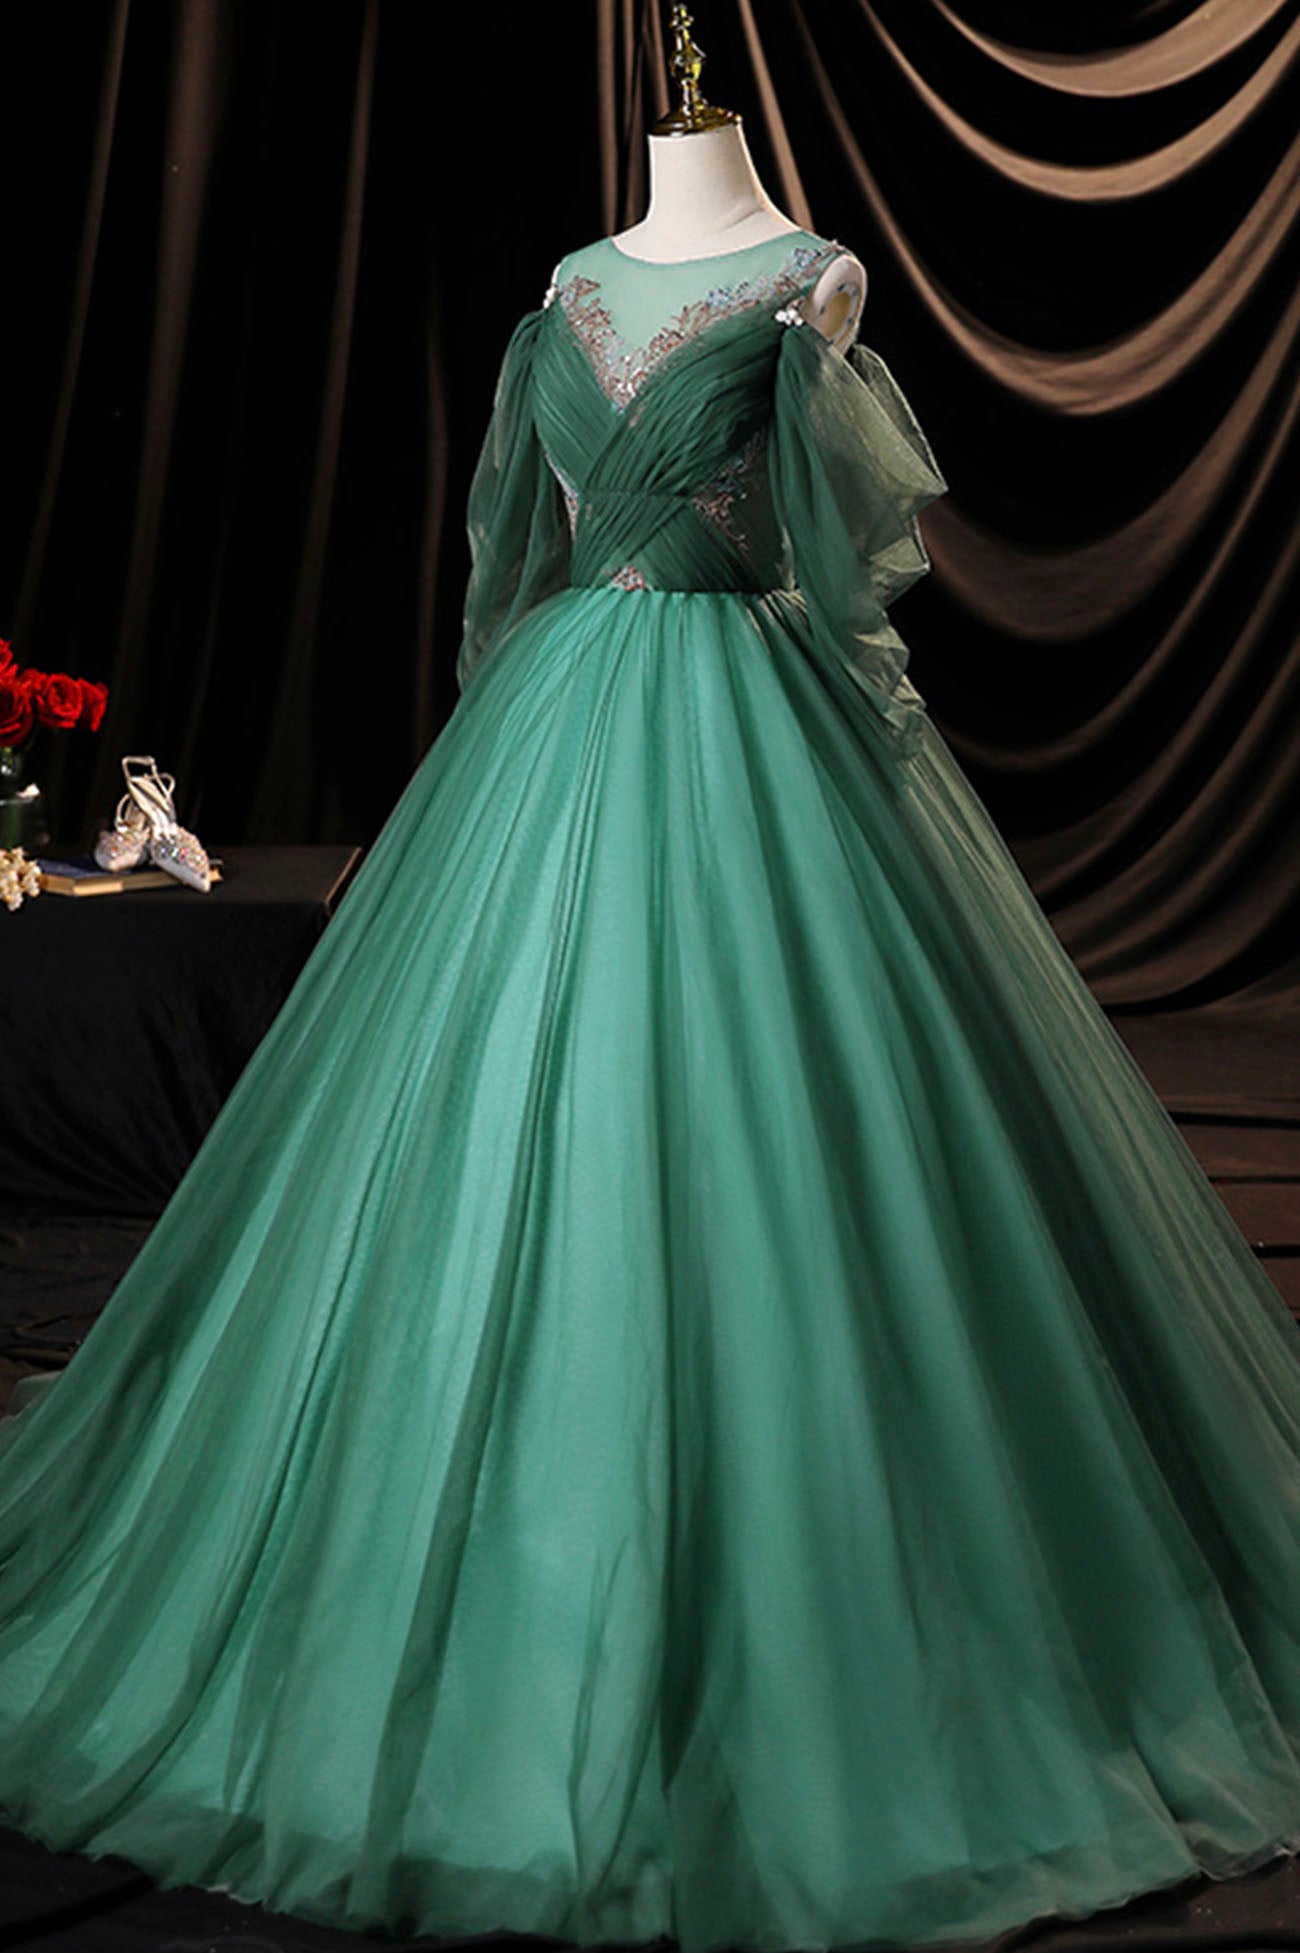 Green Scoop Neckline Tulle Formal Evening Dress, A-Line Long Sleeve Prom Dress